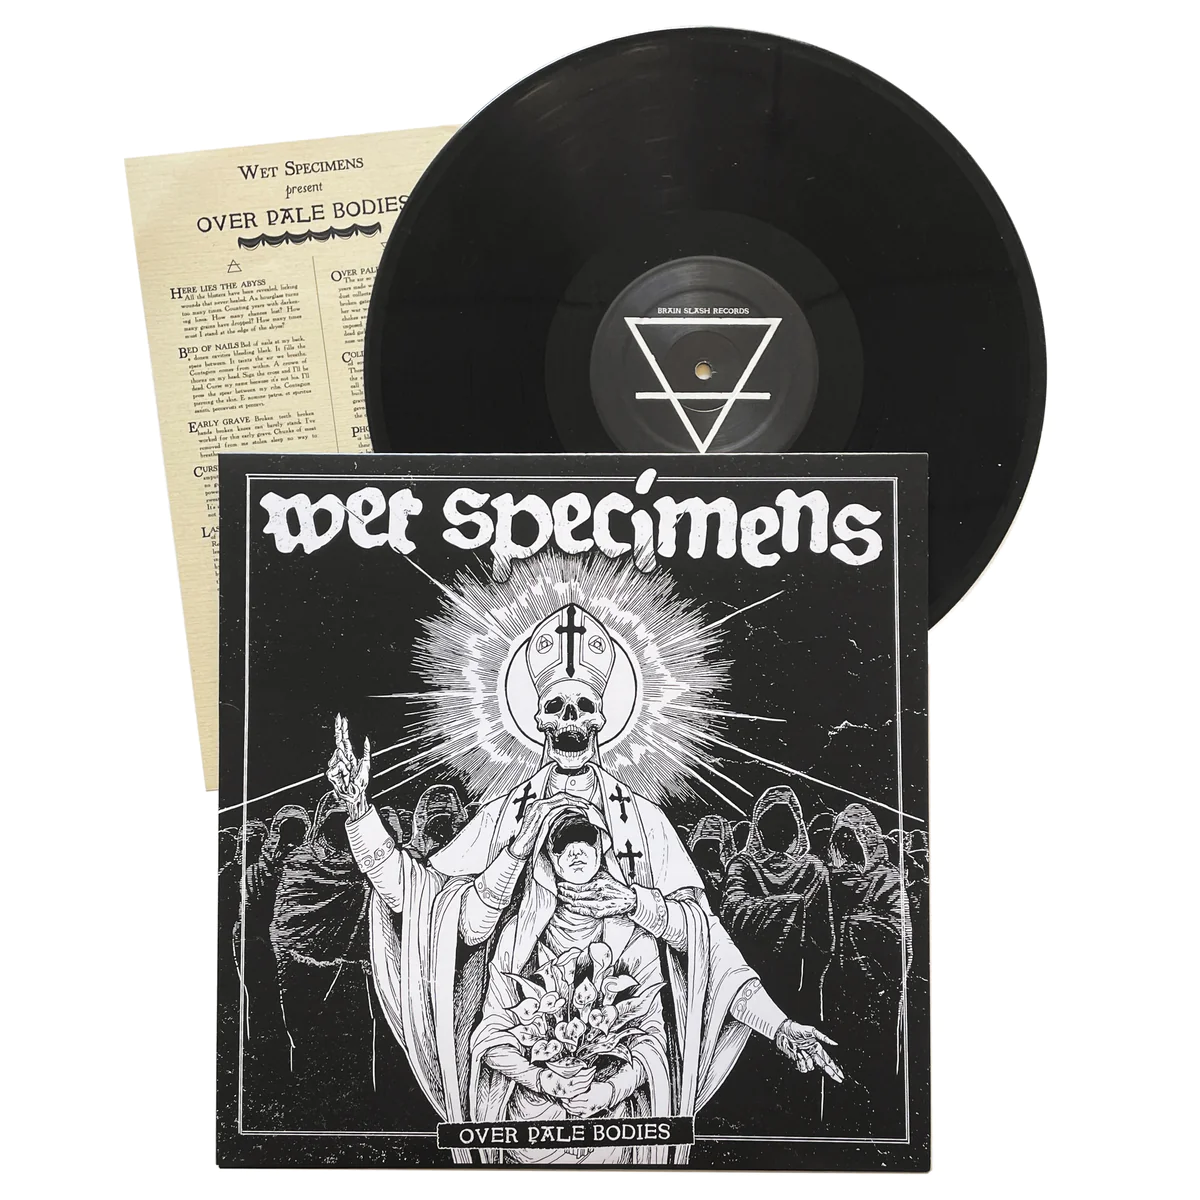 Wet Specimens- Over Pale Bodies LP ~DISCHARGE!